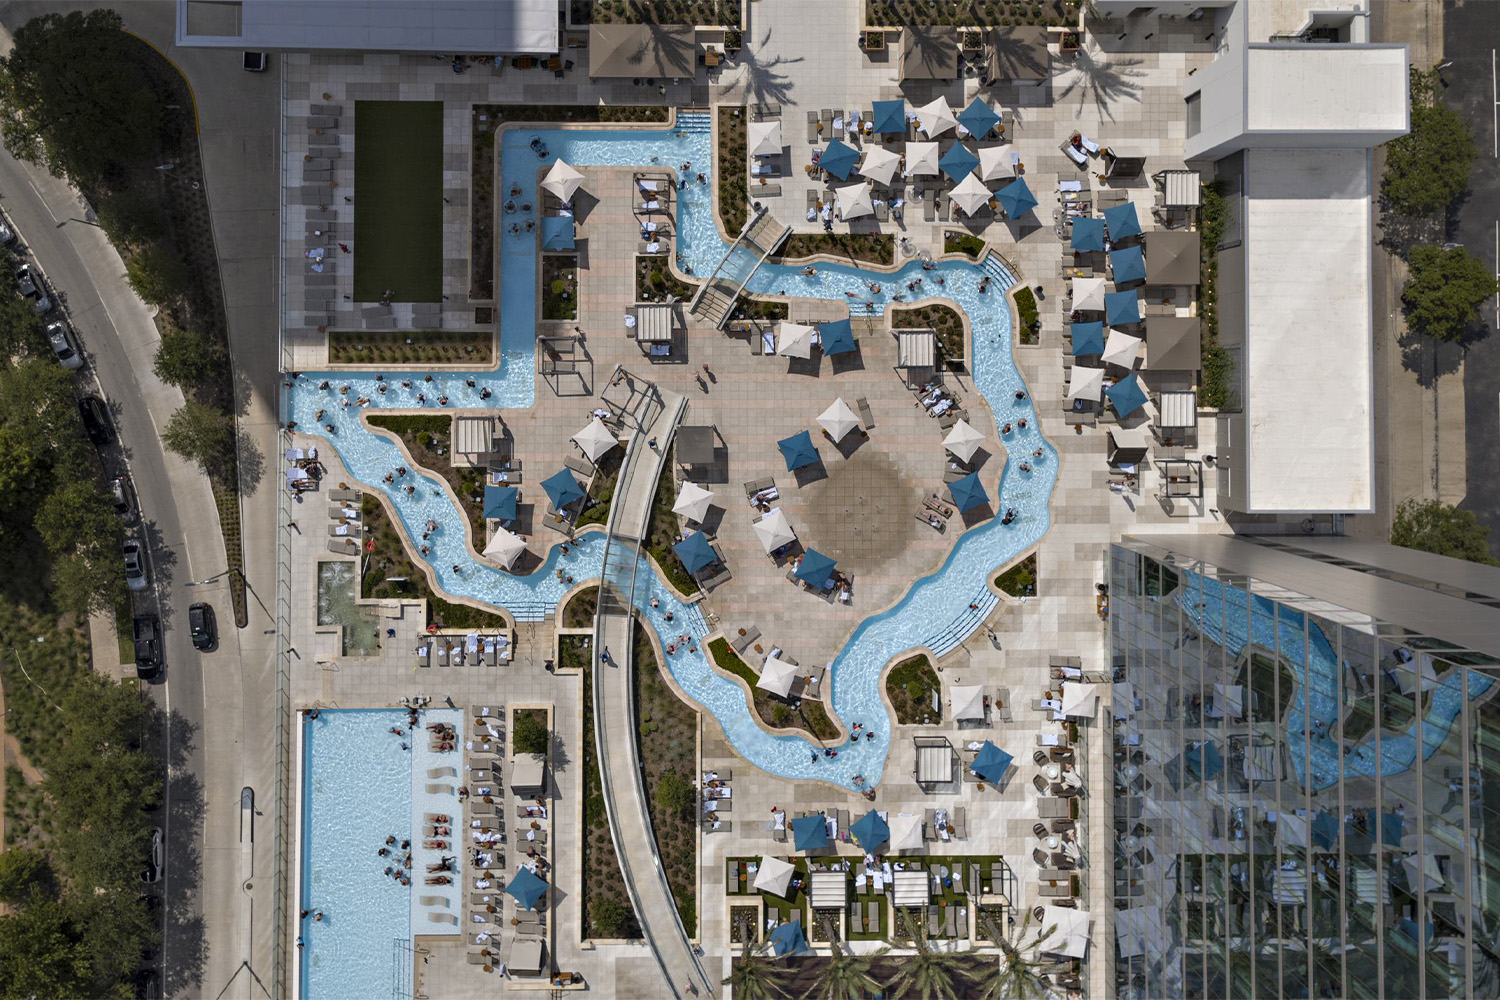 Pool at the Mariott Marquis Houston, shaped like Texas.